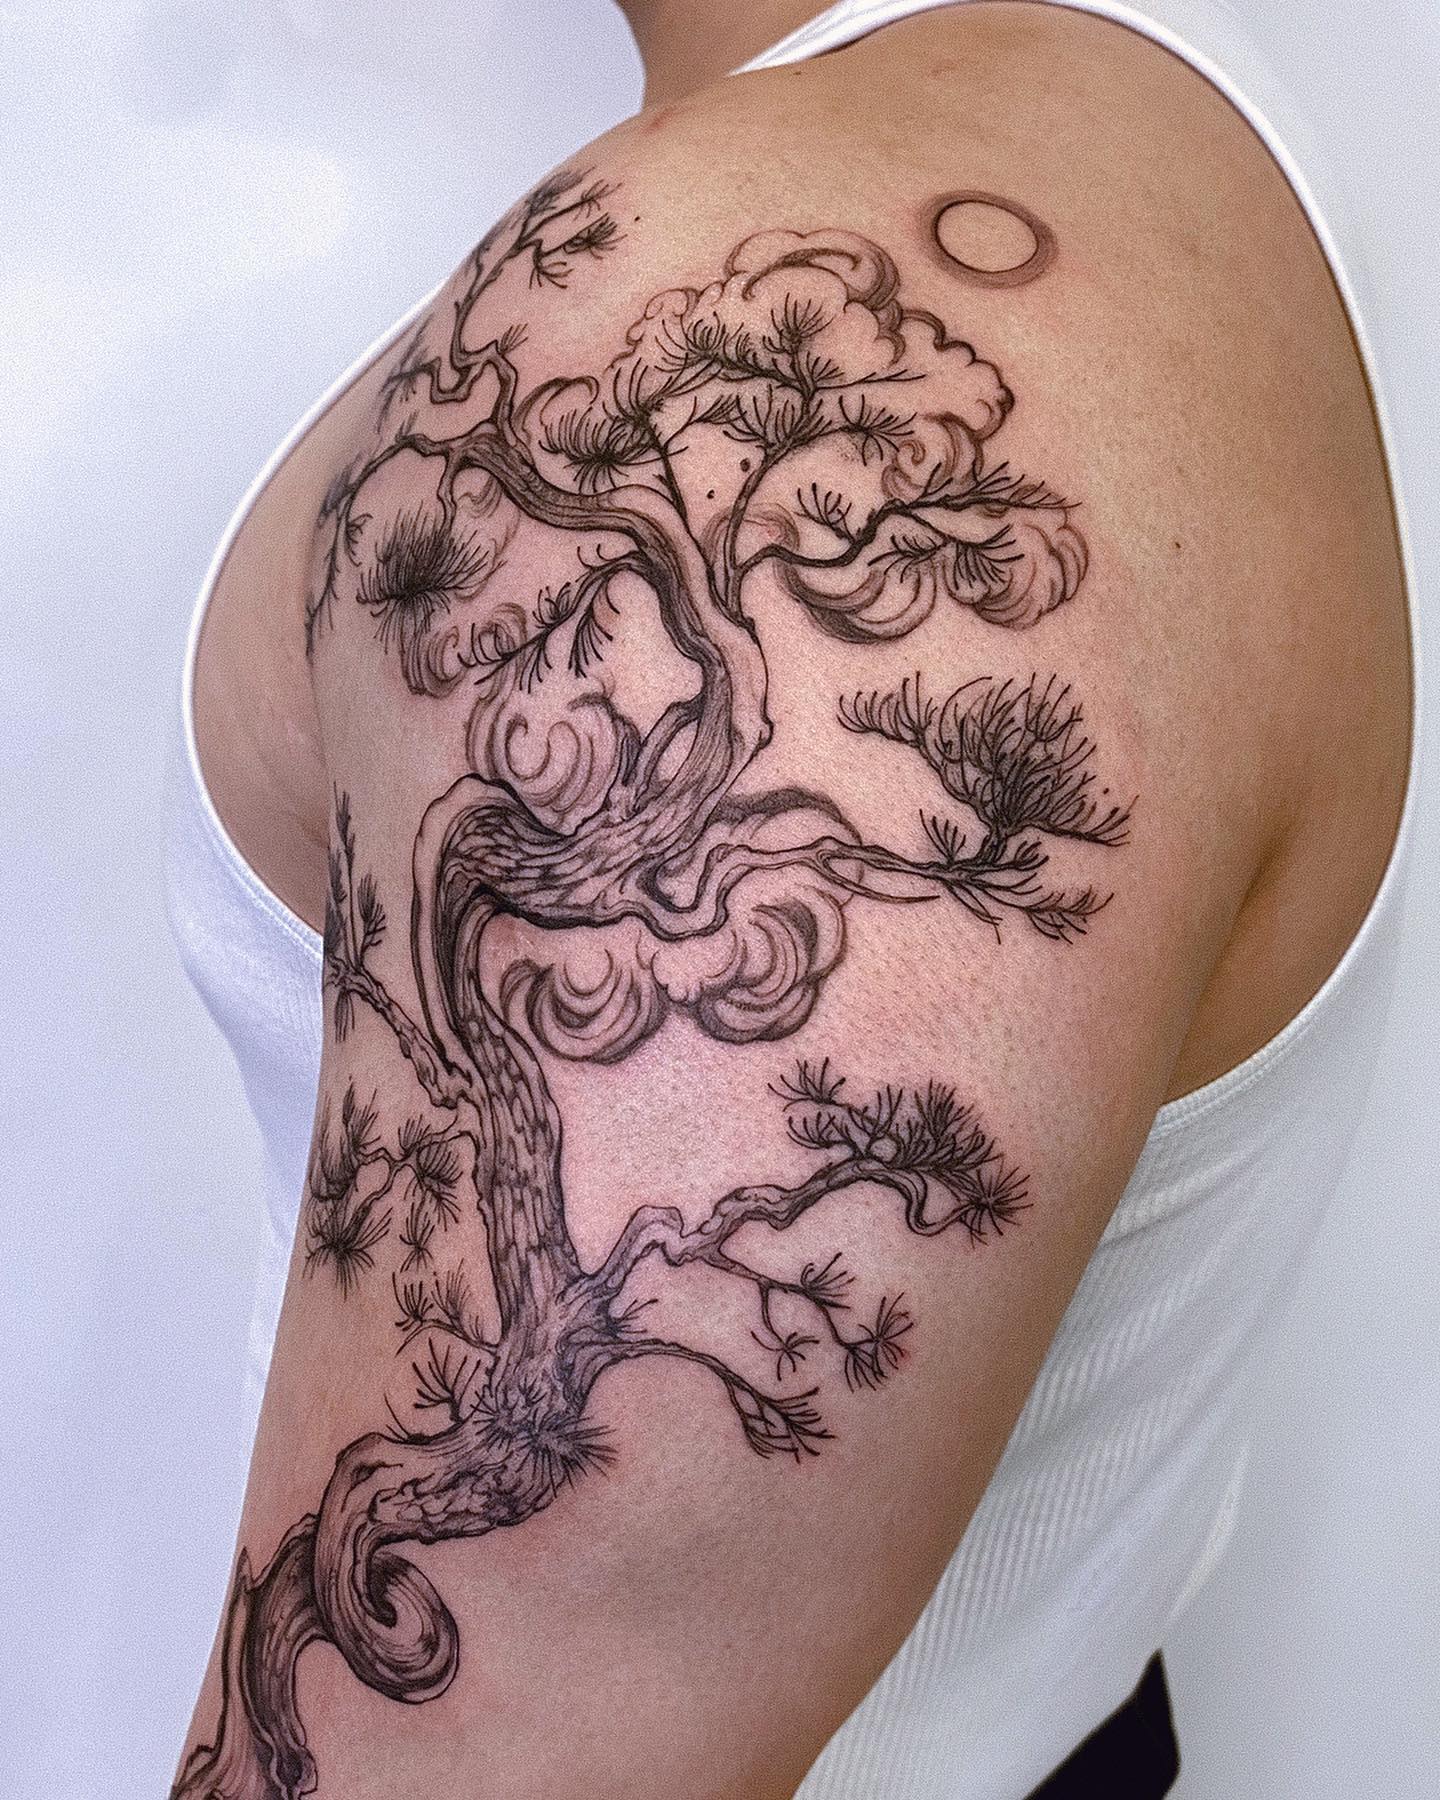 life and death tree tattoo